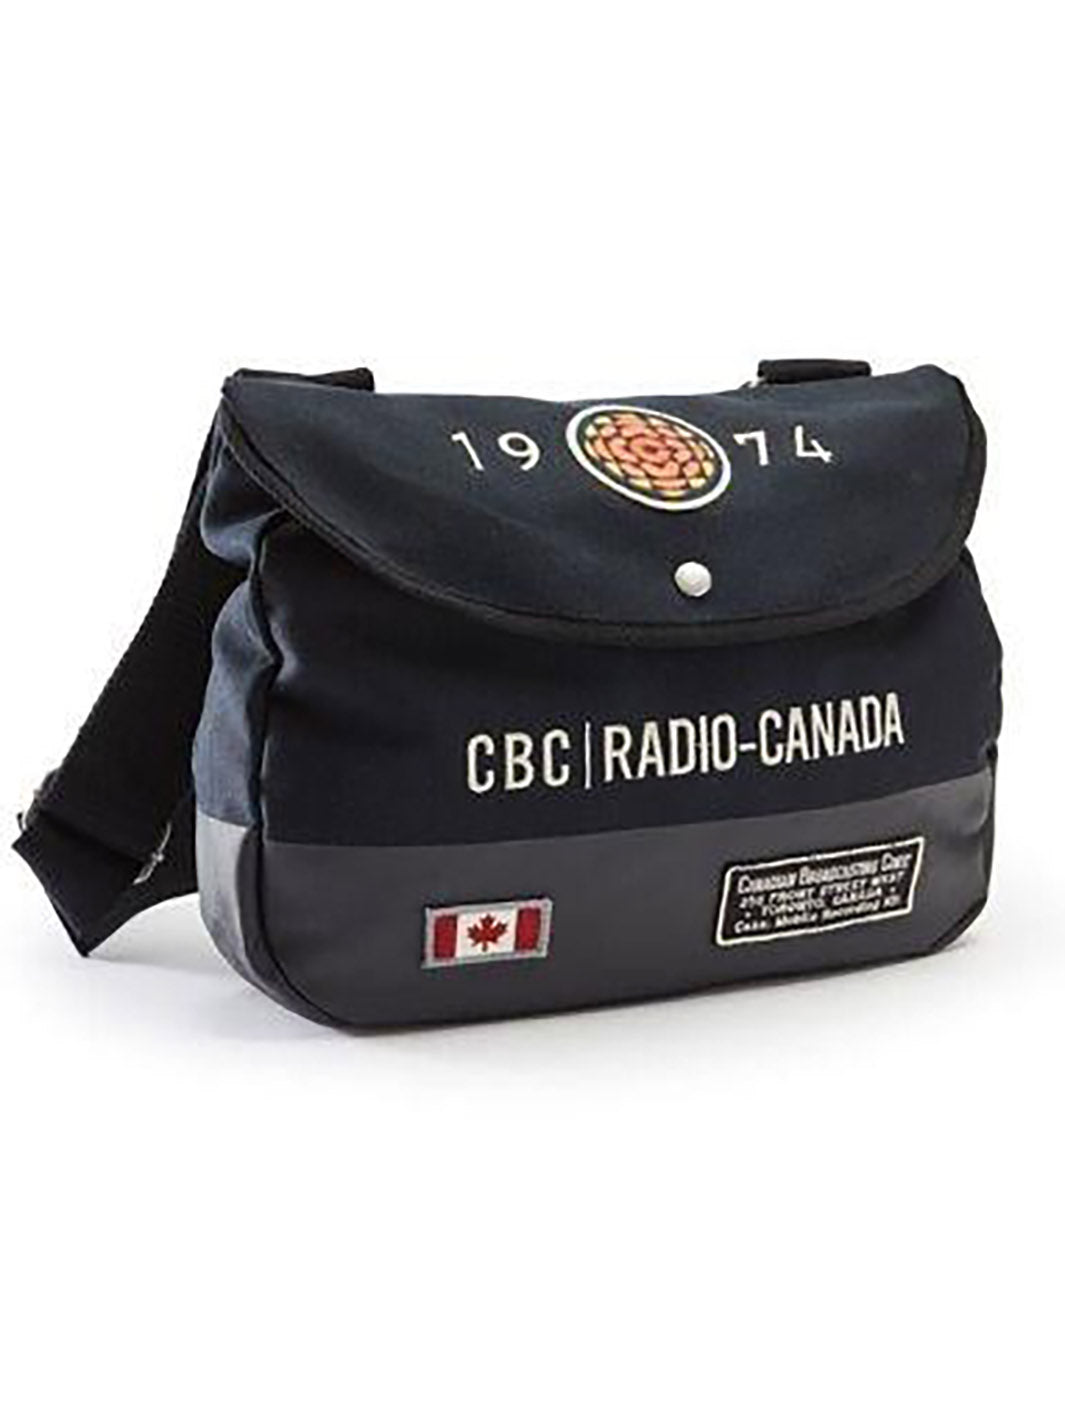 Sac messager CBC RADIO-CANADA 1974 avec bandouillere ET LOGO bleu marine